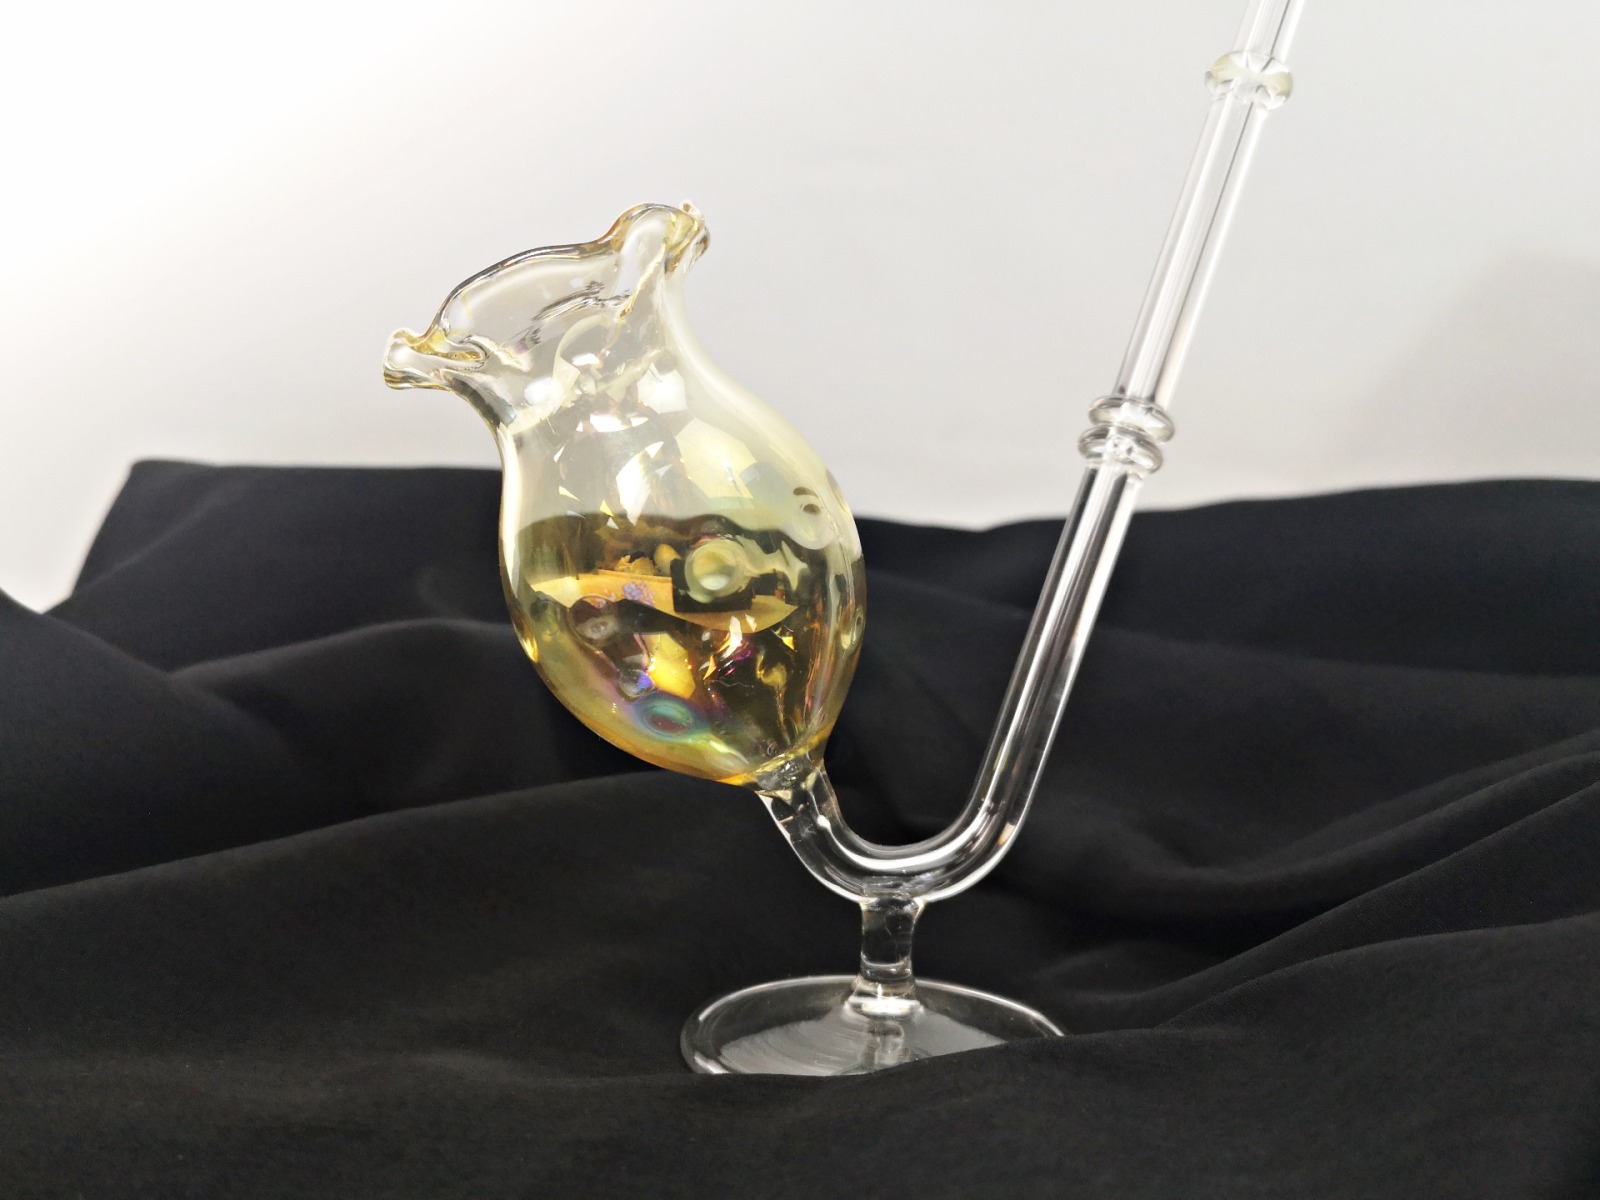 filigrane Cognacpfeife / Schnapspfeife / Glaspfeife / Pfeife aus Glas / mundgeblasen und handgeformt